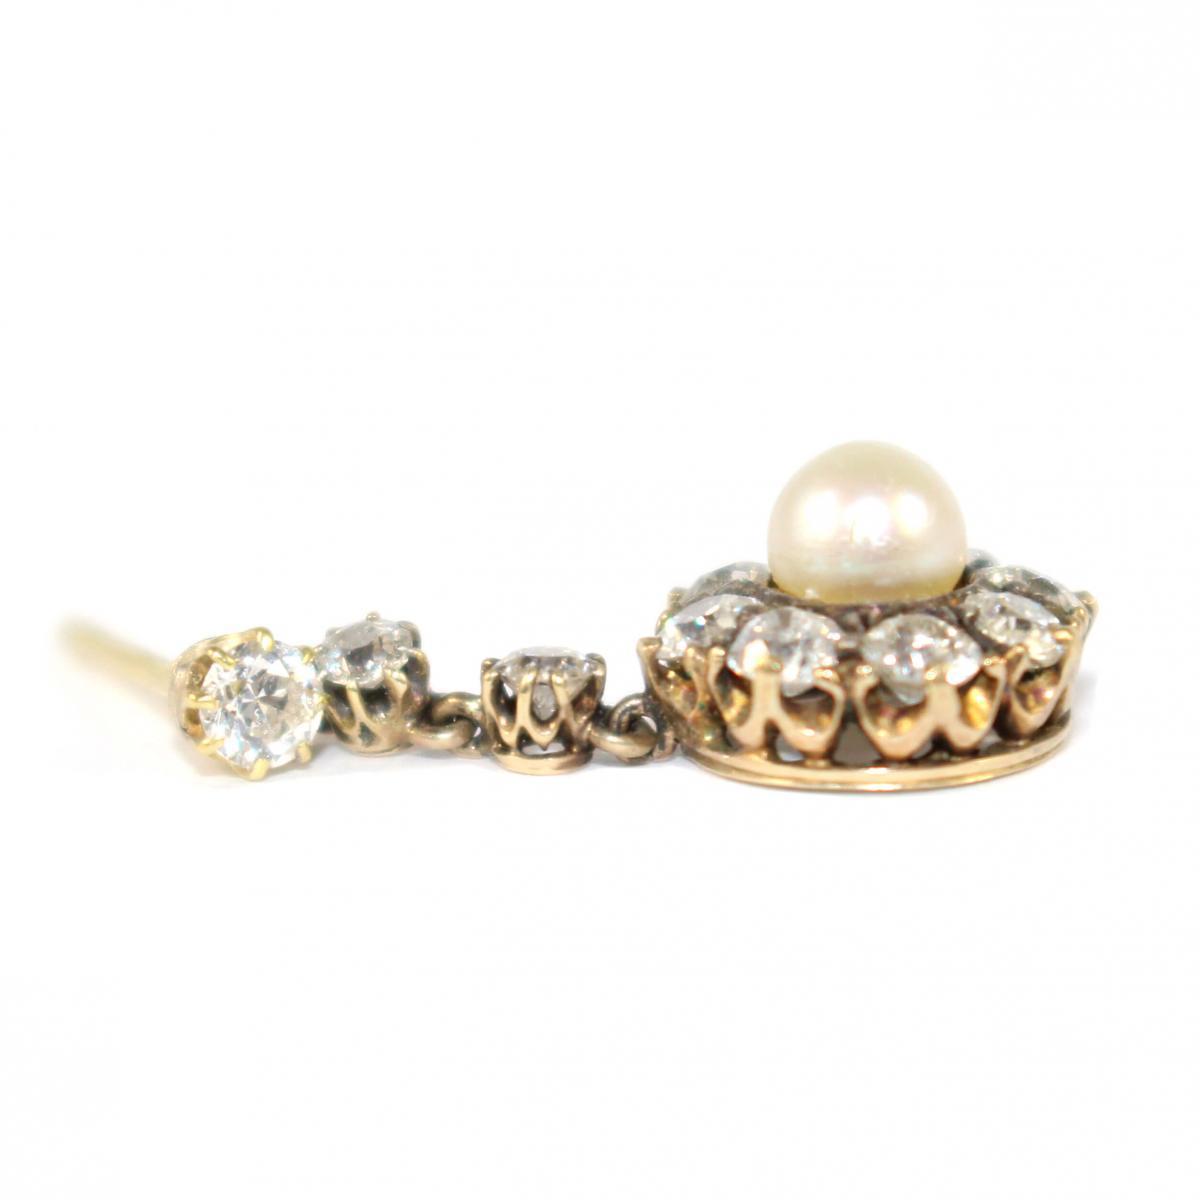 Victorian Pearl & old-cut Diamond Cluster Drop Earrings c.1890